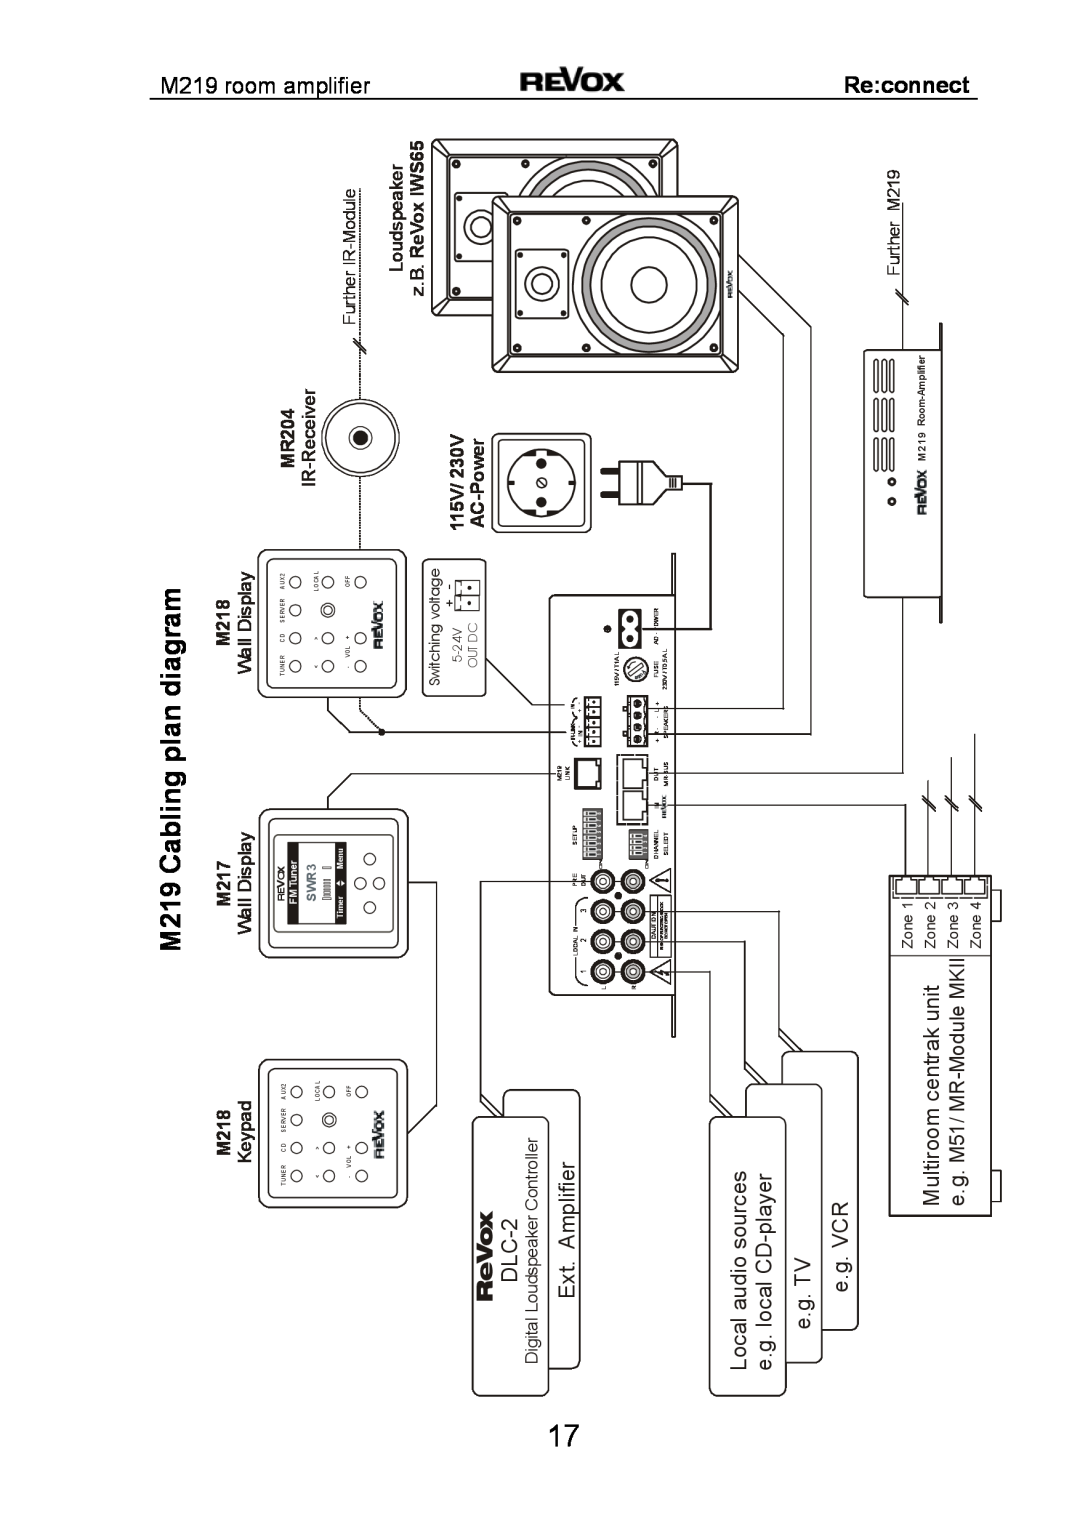 Revox M 219 M219 Cabling plan diagram, ReVox, DLC-2, M219 room amplifier, Ext. Amplifier, e.g. TV e.g. VCR, Re connect, On 